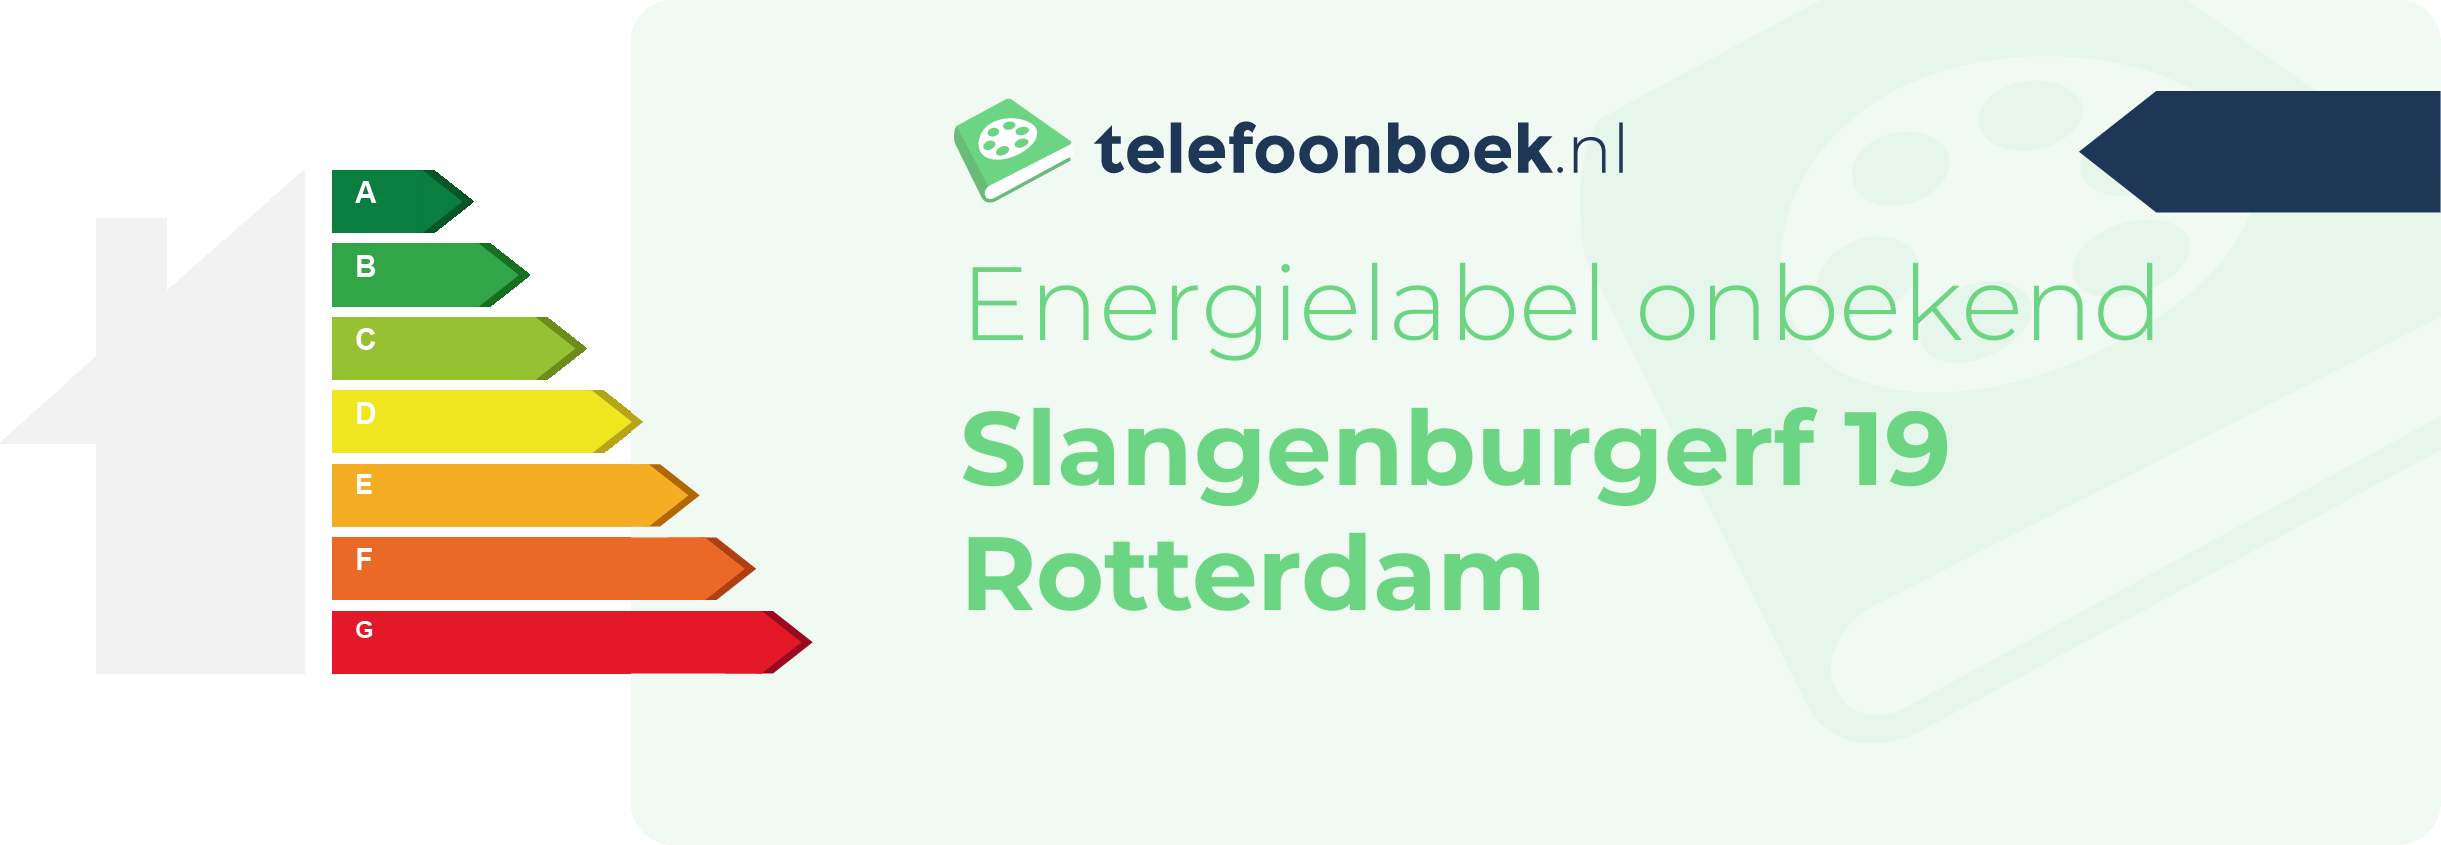 Energielabel Slangenburgerf 19 Rotterdam